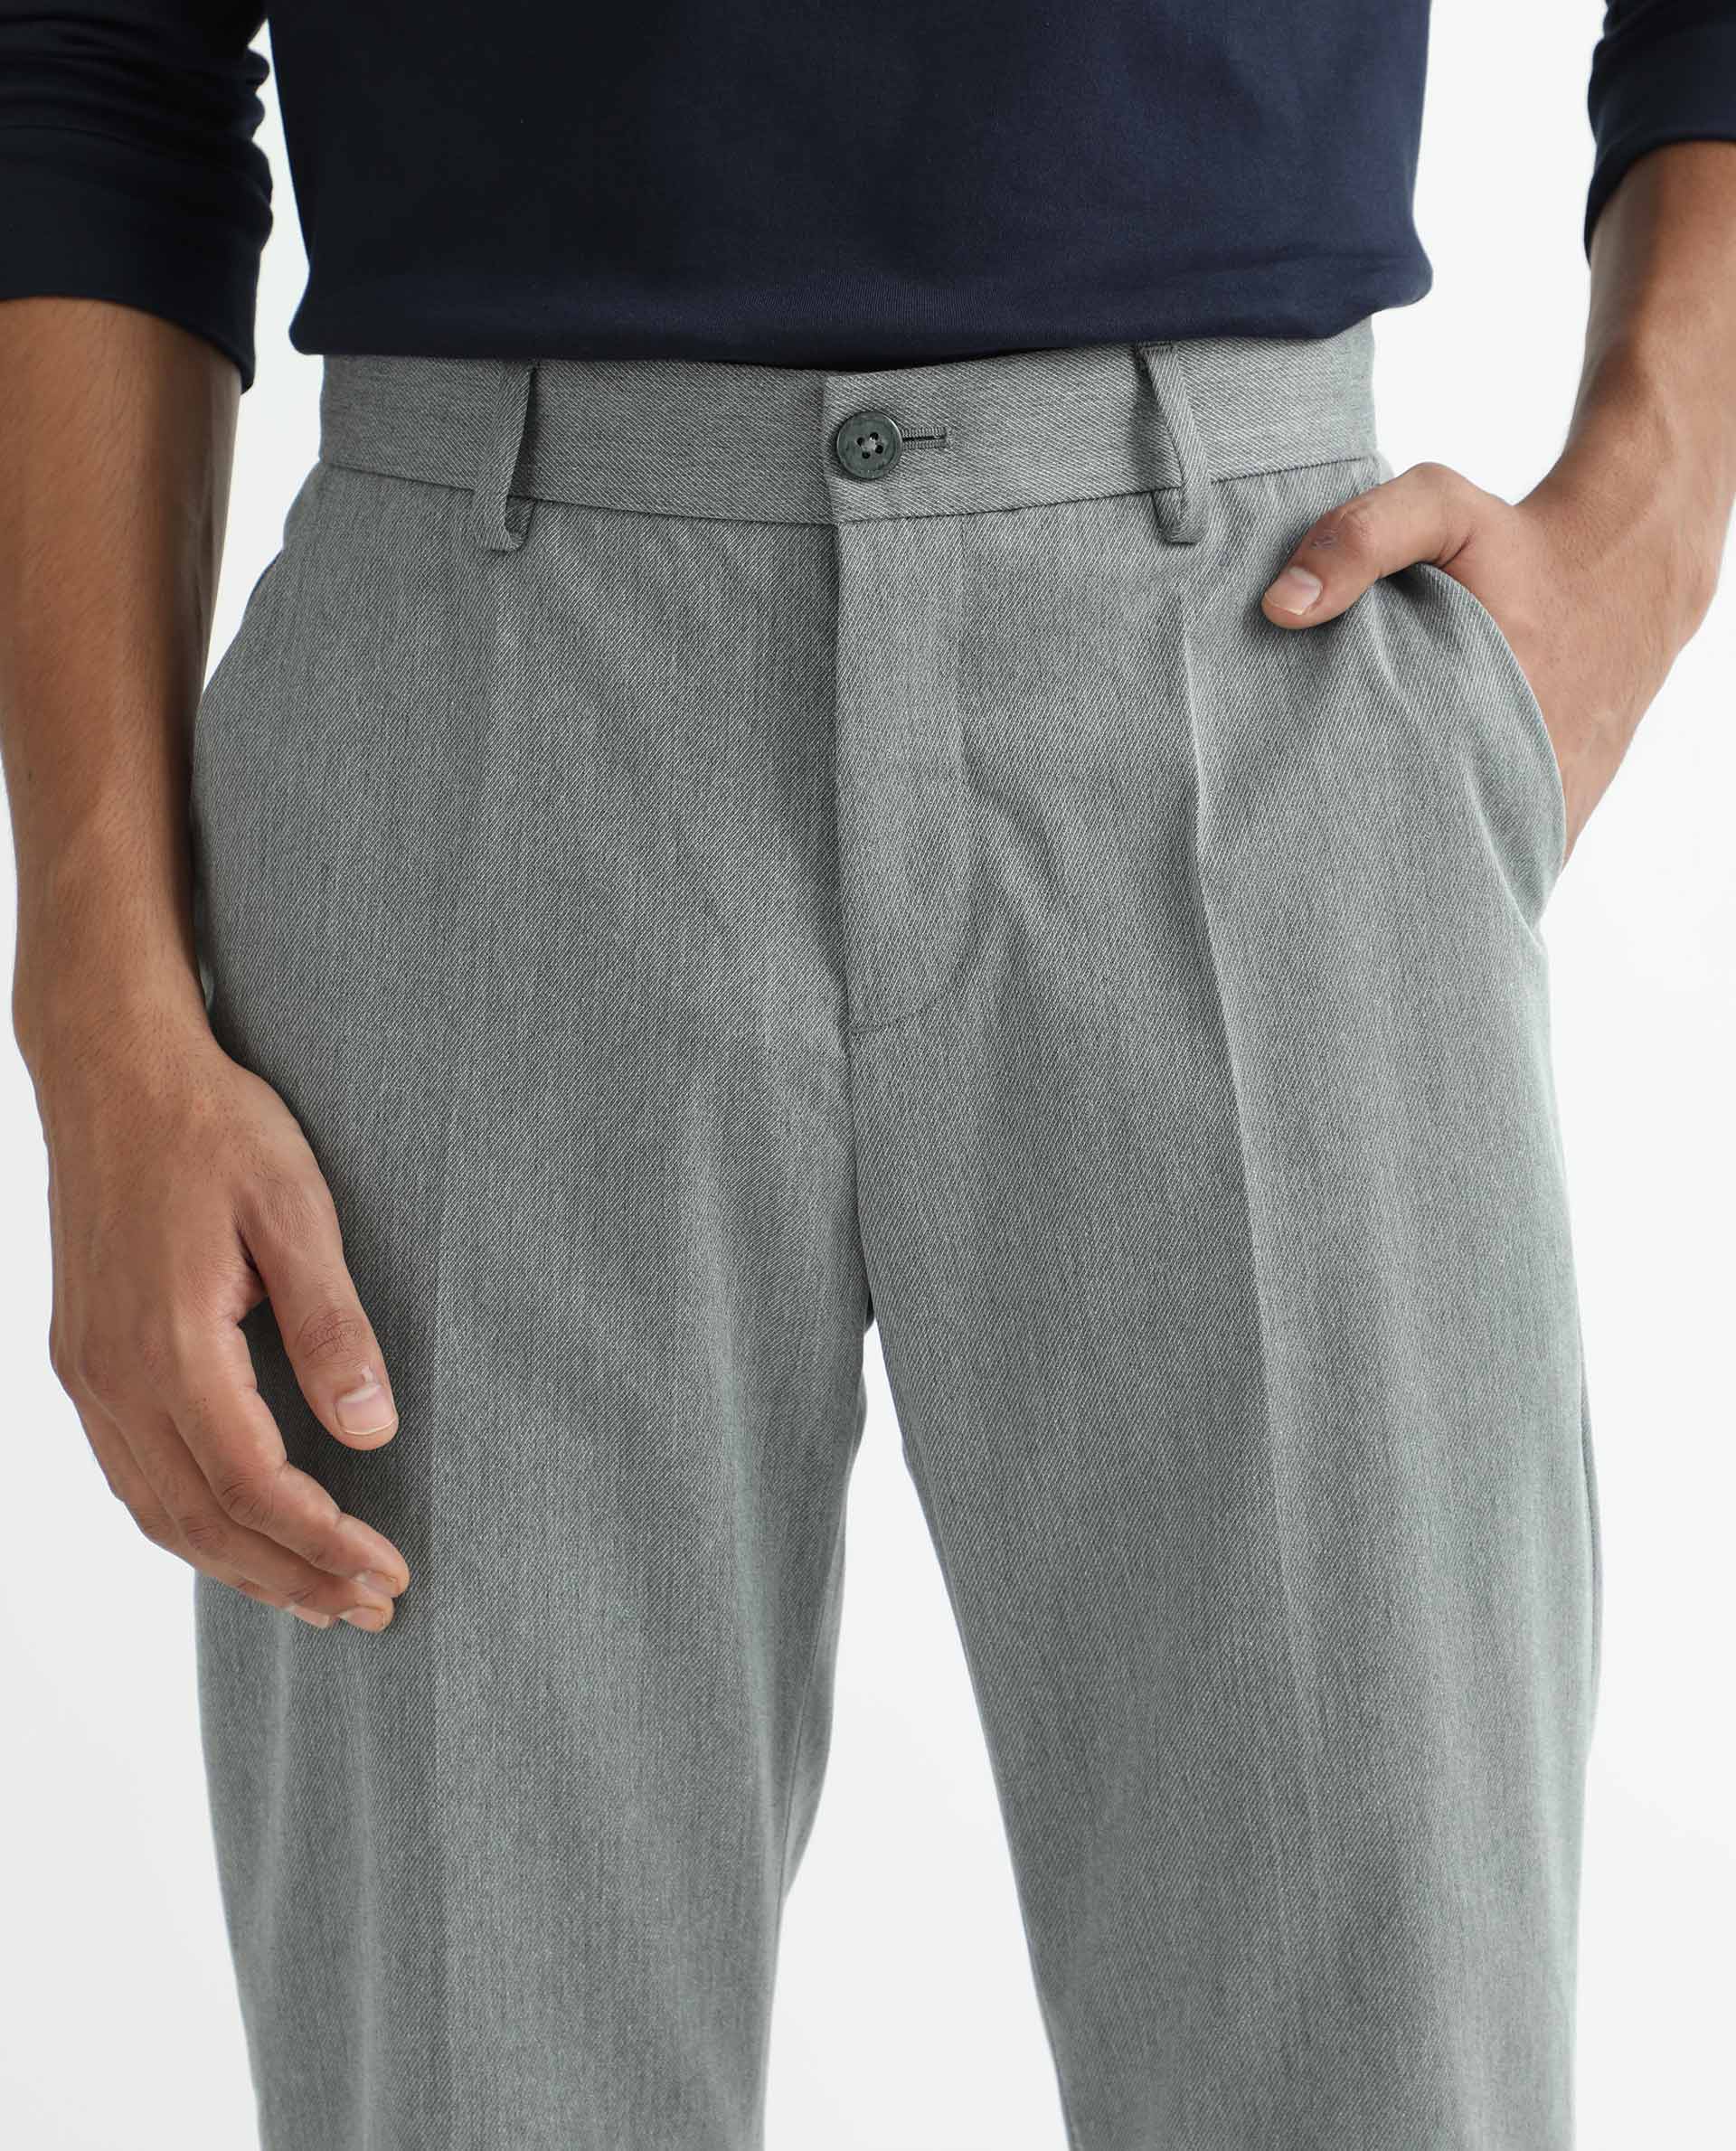 Buy Zee Gold Men's Regular Fit Poly Cotton Trousers (Z-g-1000_Dark Blue,  Grey, Black, Cobalt Blue_28) at Amazon.in